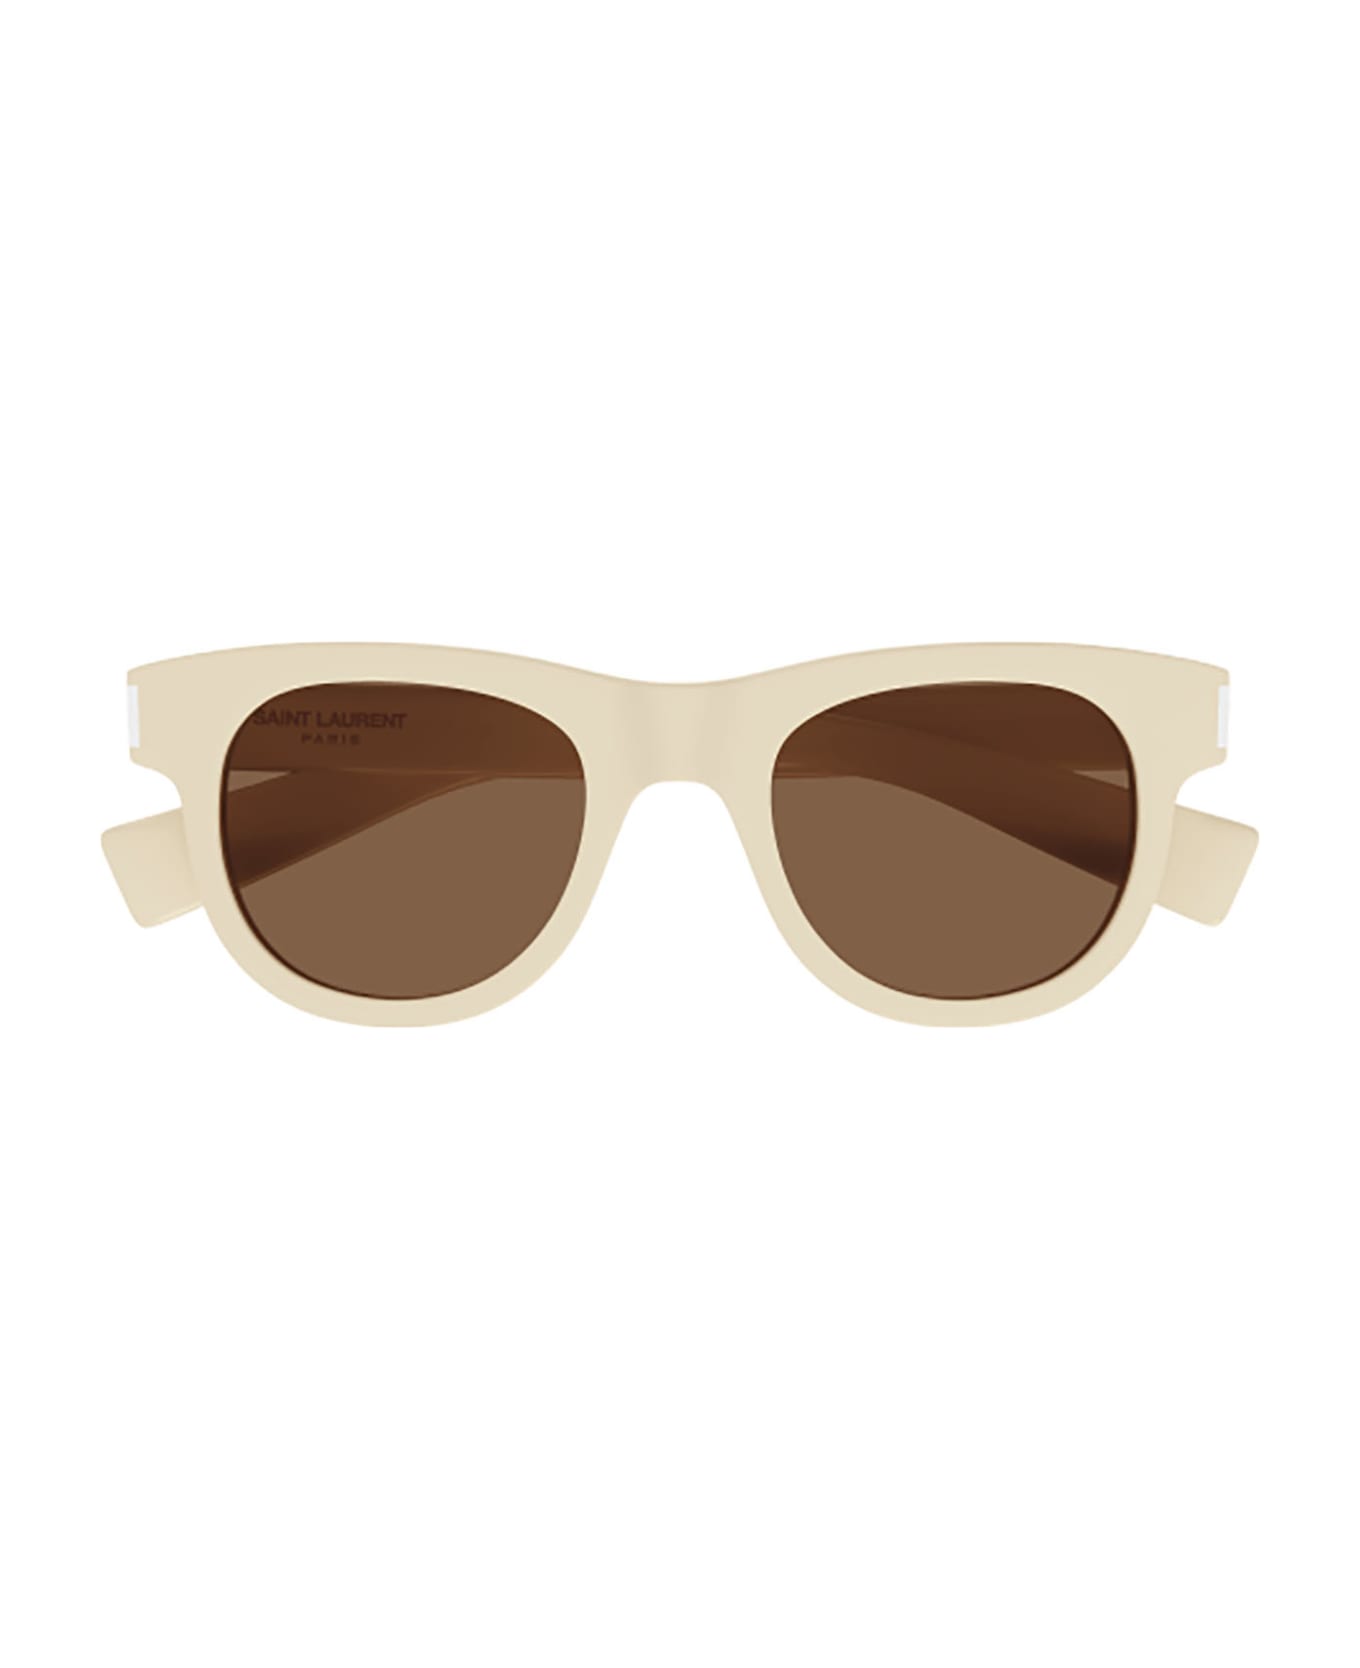 Saint Laurent Eyewear SL 571 Sunglasses - Ivory Ivory Brown